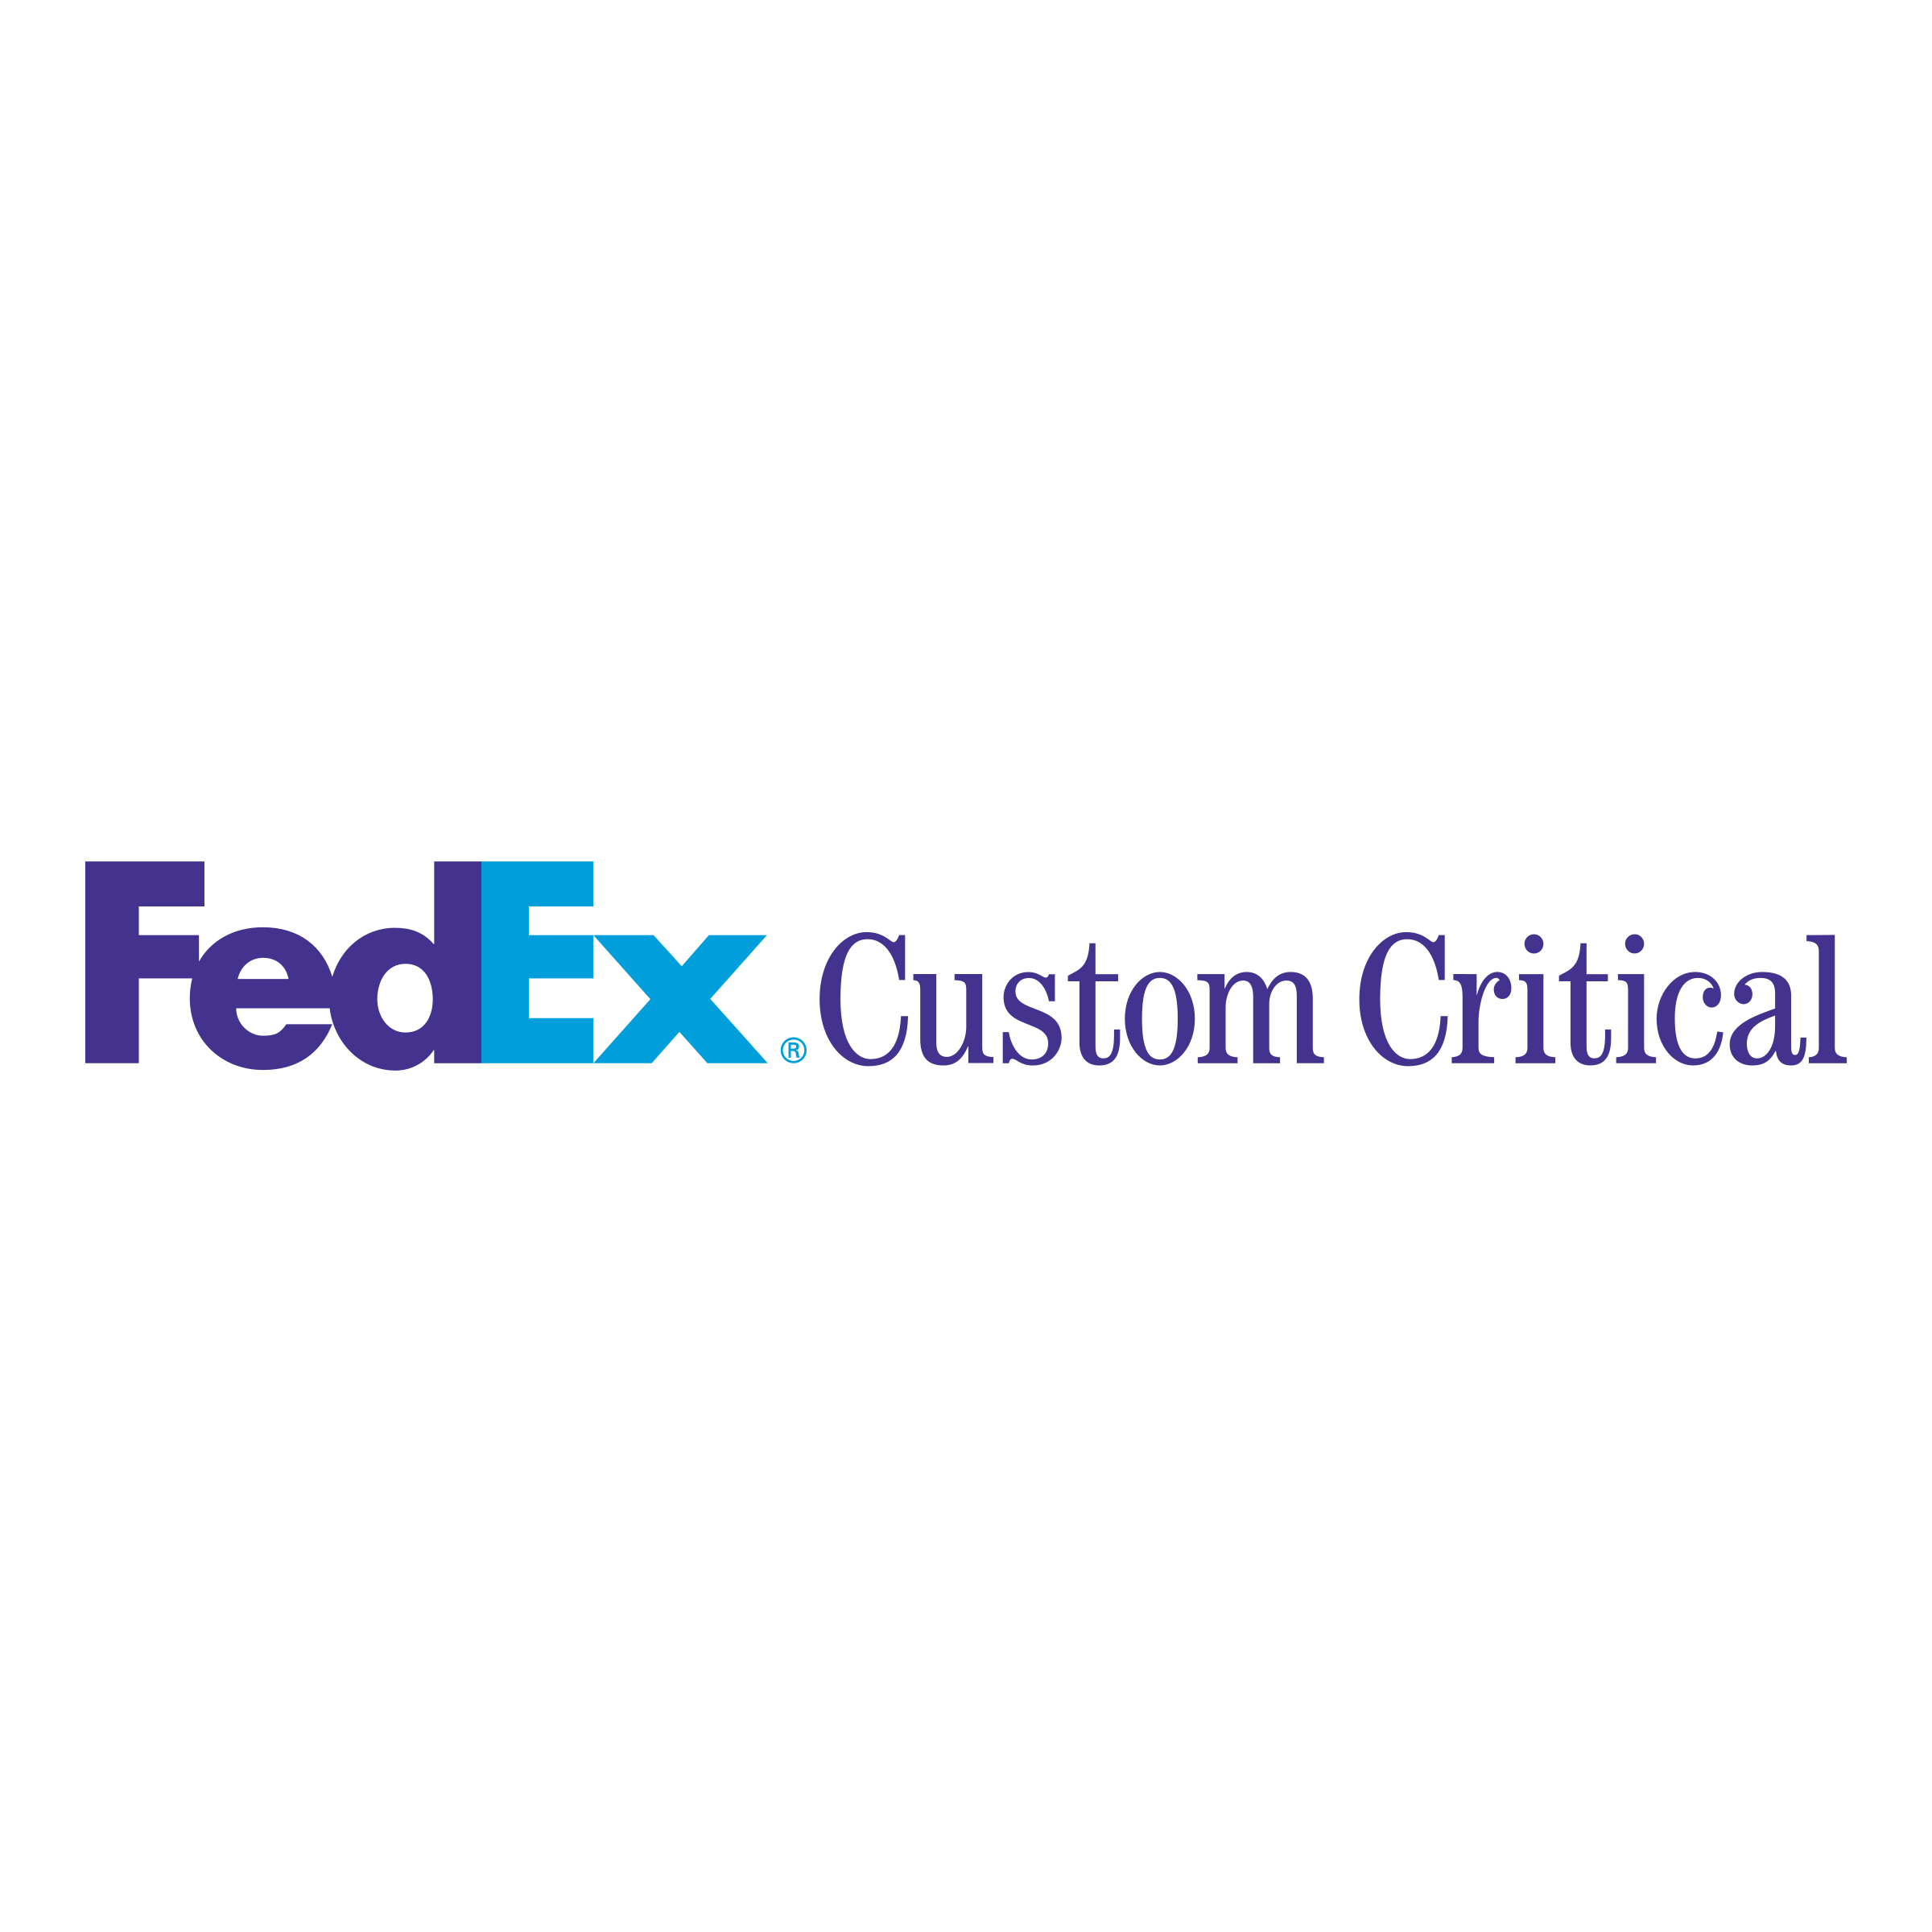 FedEx Custom Critical Logo - FedEx Custom Critical Logo PNG Transparent & SVG Vector - Freebie Supply